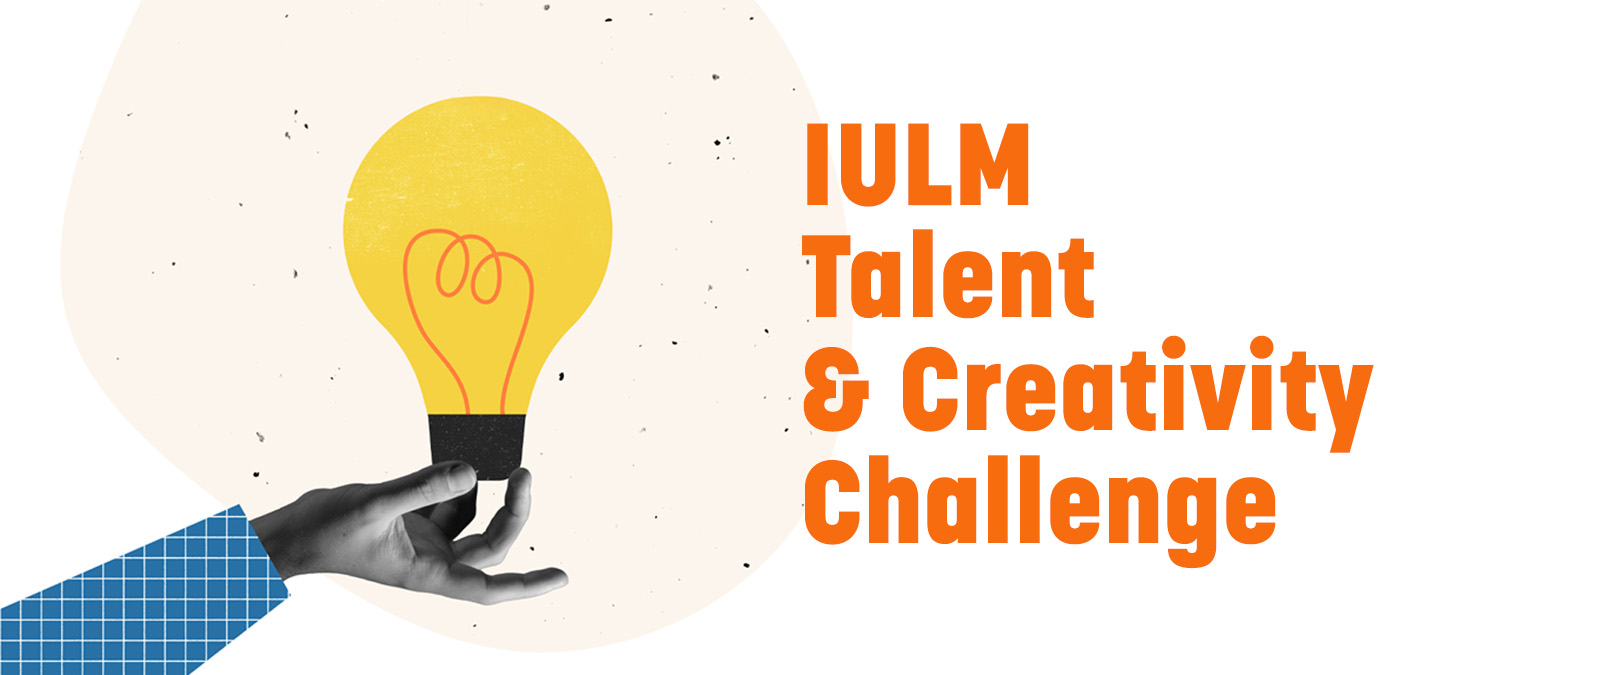 IULM Talent & Creativity Challenge second edition evaluations kick off